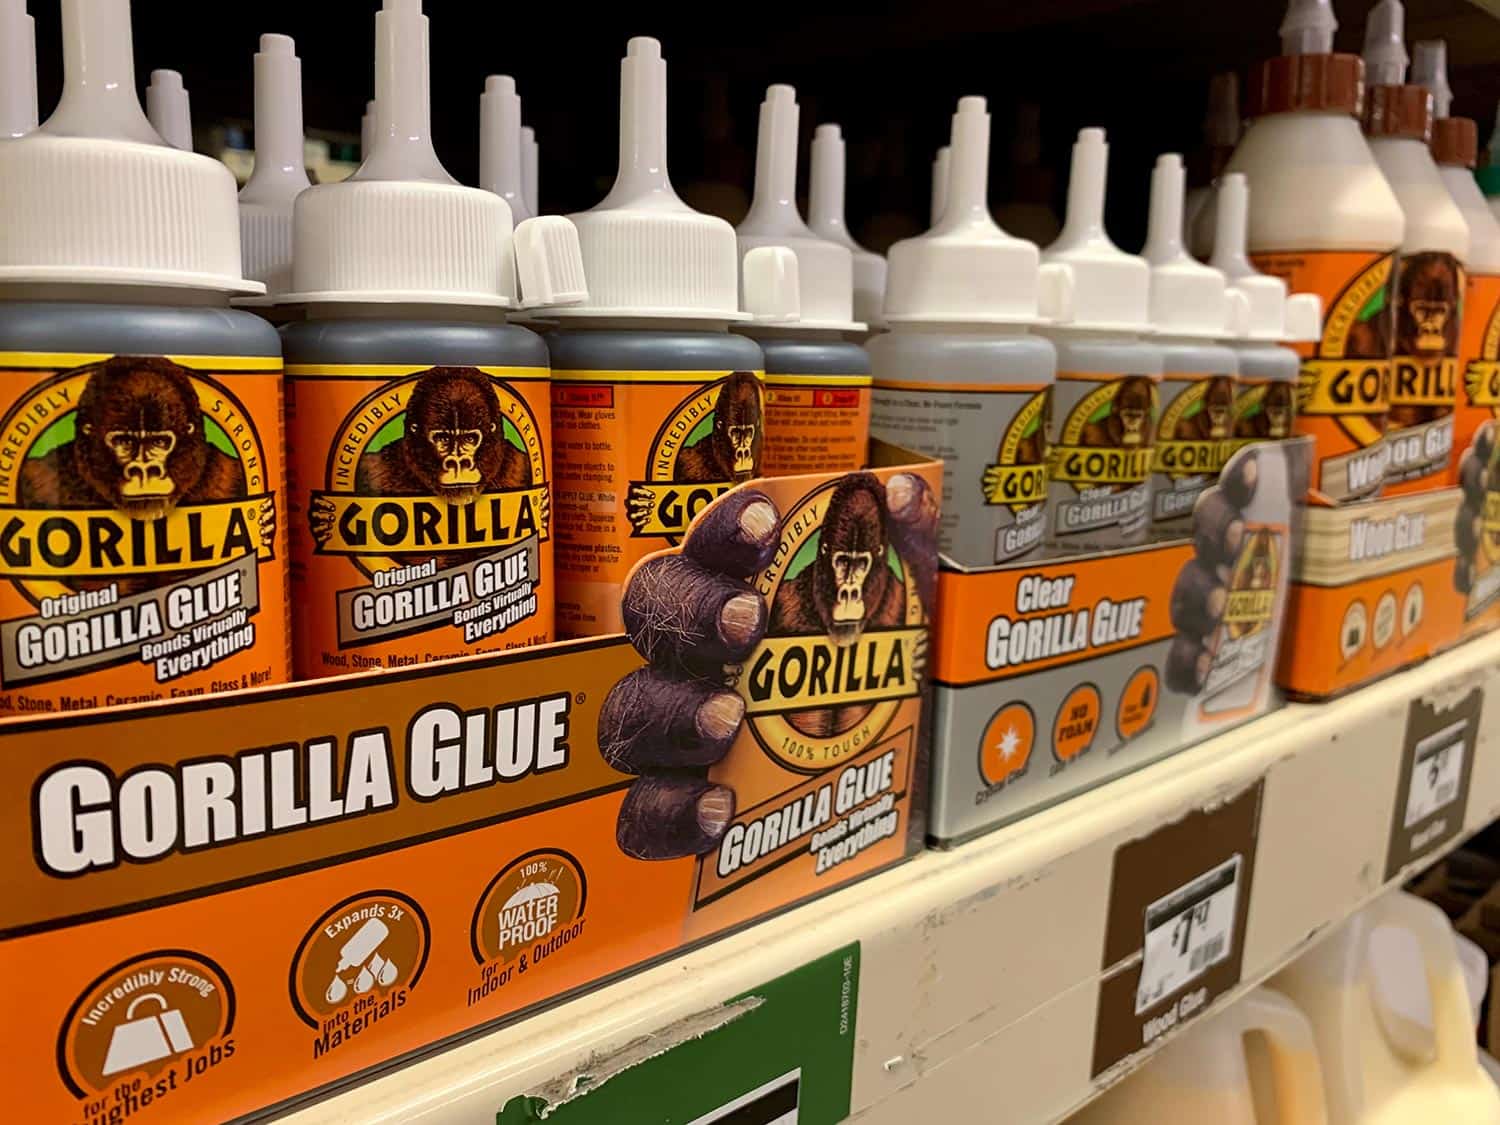 GORILLA GLUE product on shelf at home improvement retail store aisle